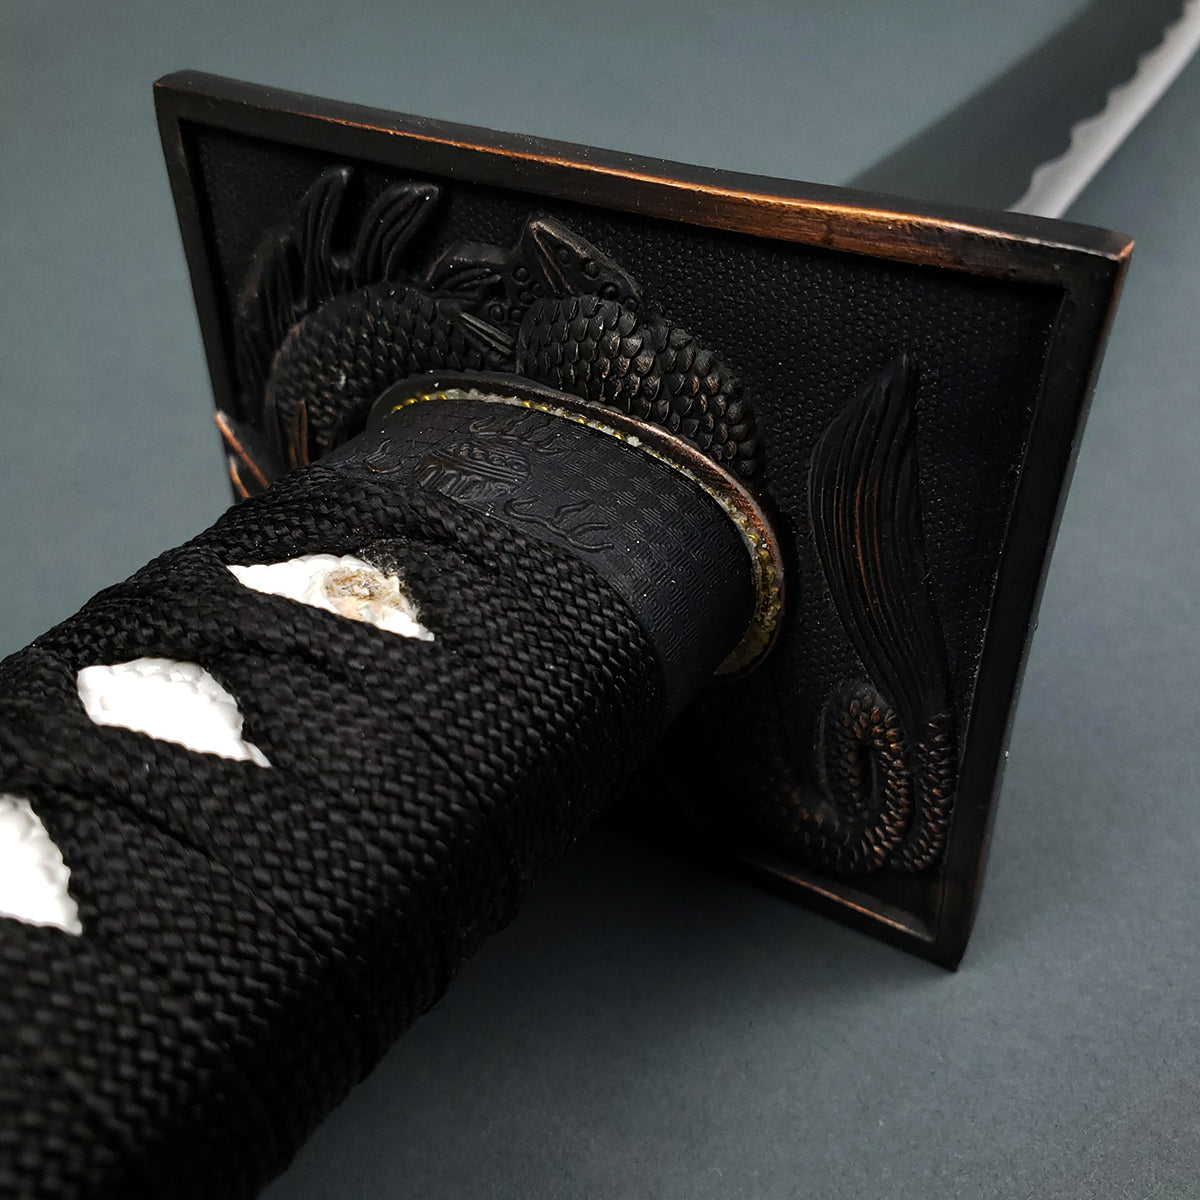 Bishamon “Mizuchi” Handmade Katana Samurai Sword - 1045 High Carbon Steel Full Tang Blade